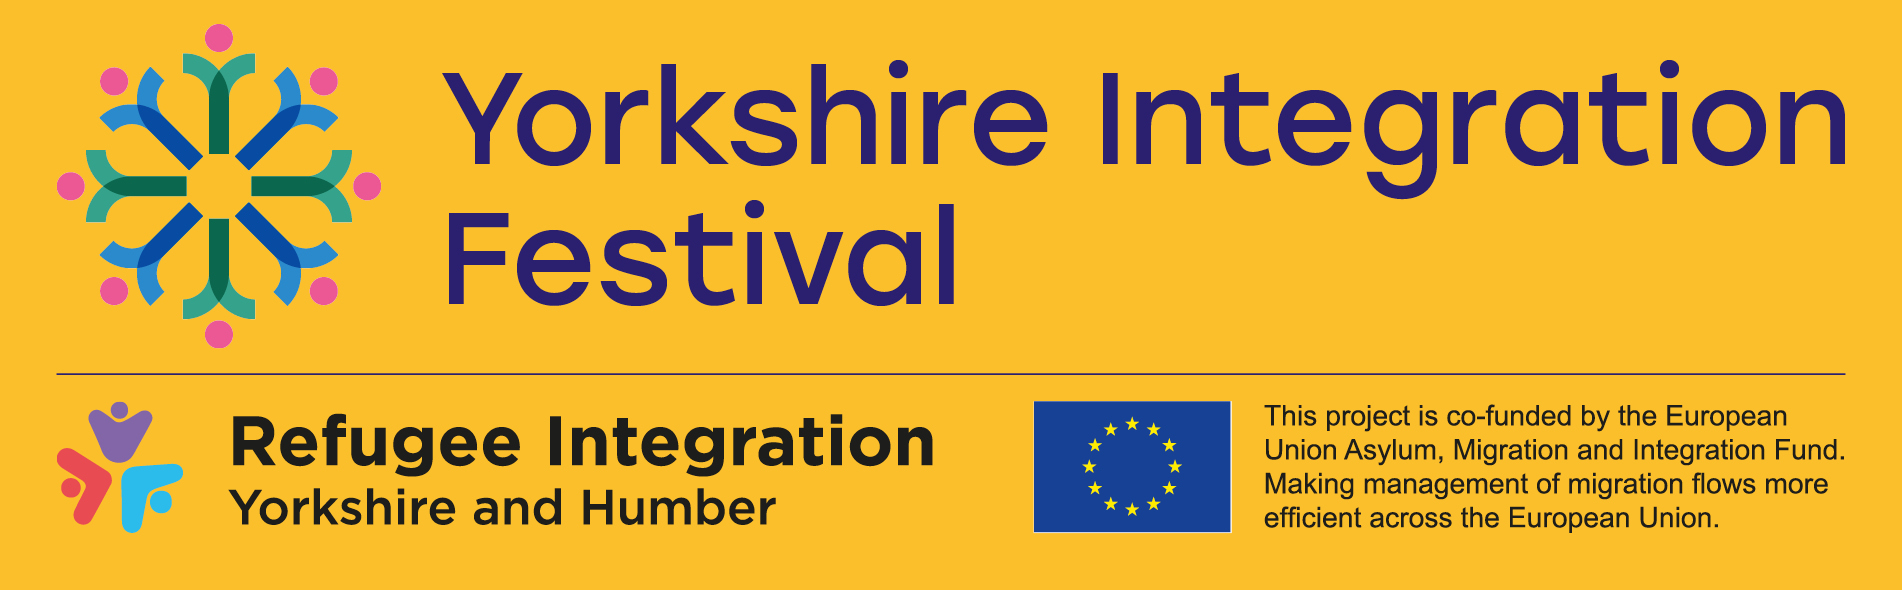 The Yorkshire Integration Festival 2022